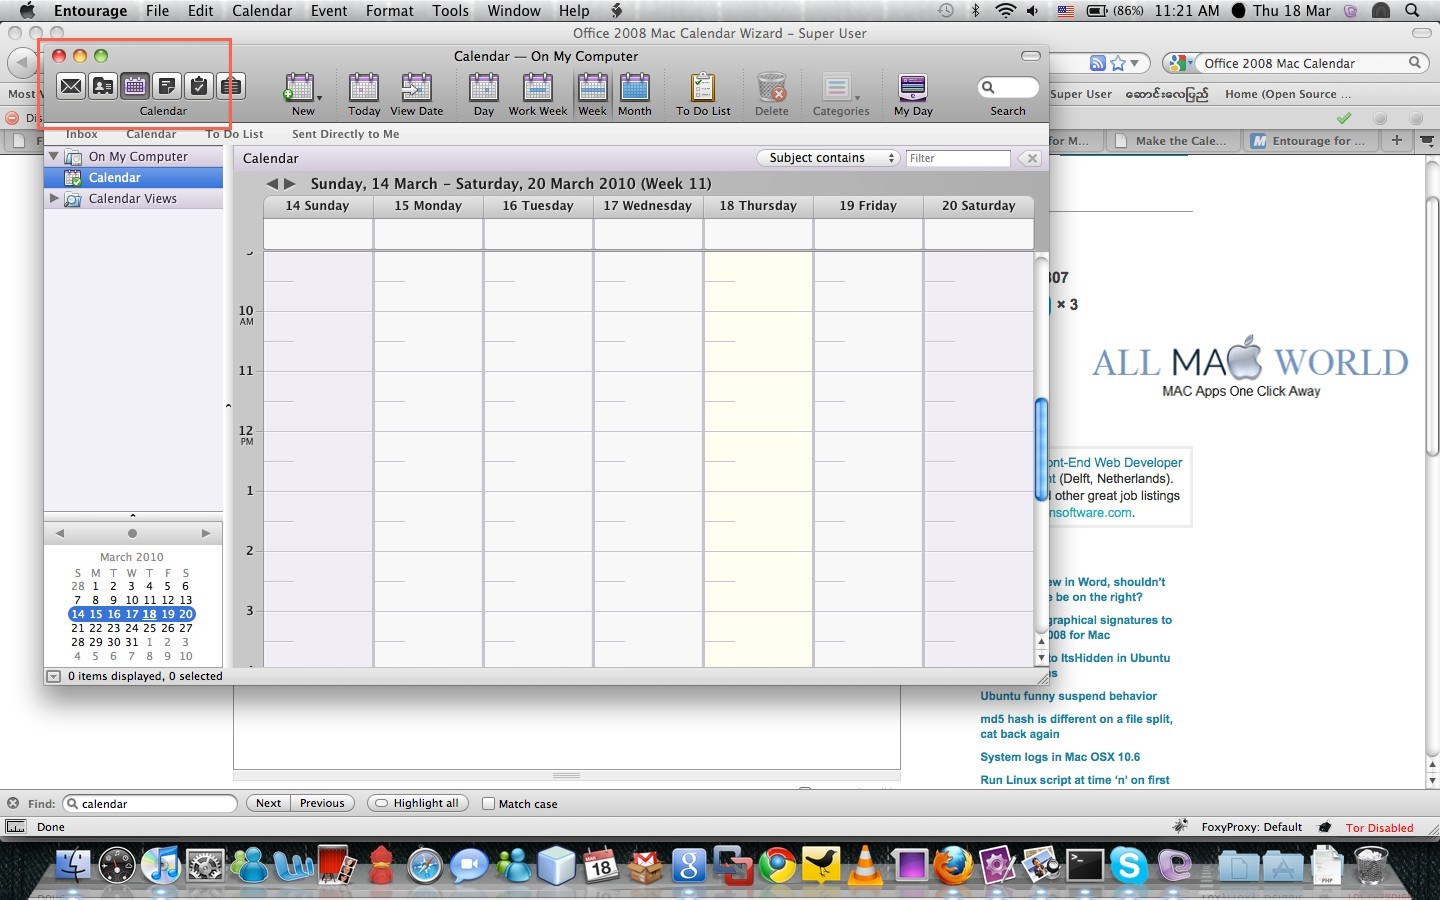 Microsoft Office Setup Assistant Mac 2011 Download